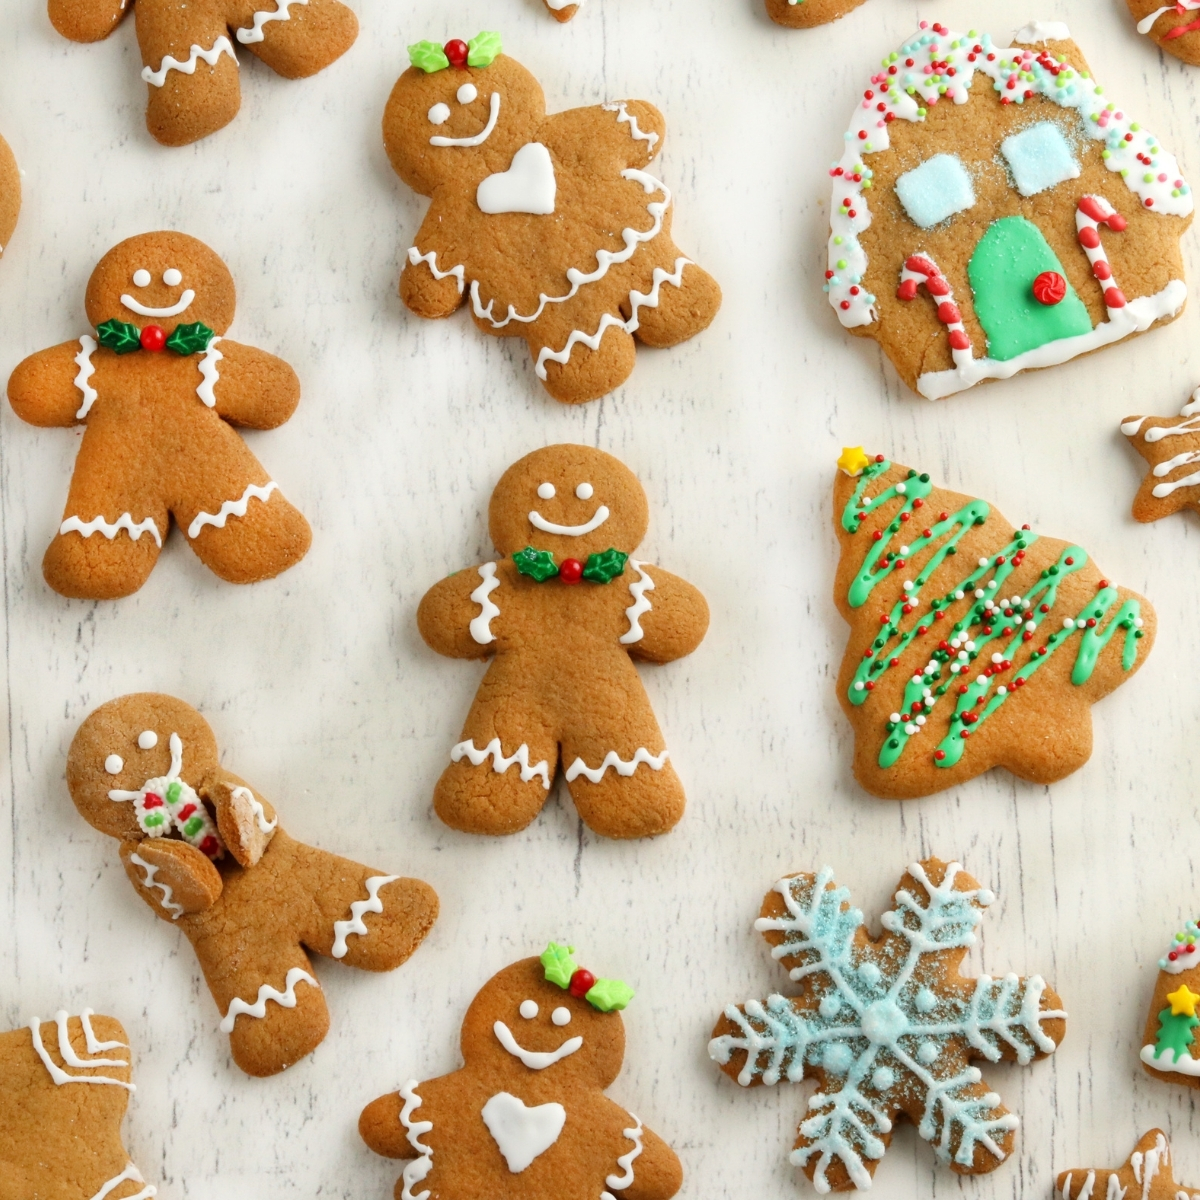 https://www.mamaknowsglutenfree.com/wp-content/uploads/2020/12/gluten-free-gingerbread-cookies-rc-5.jpg